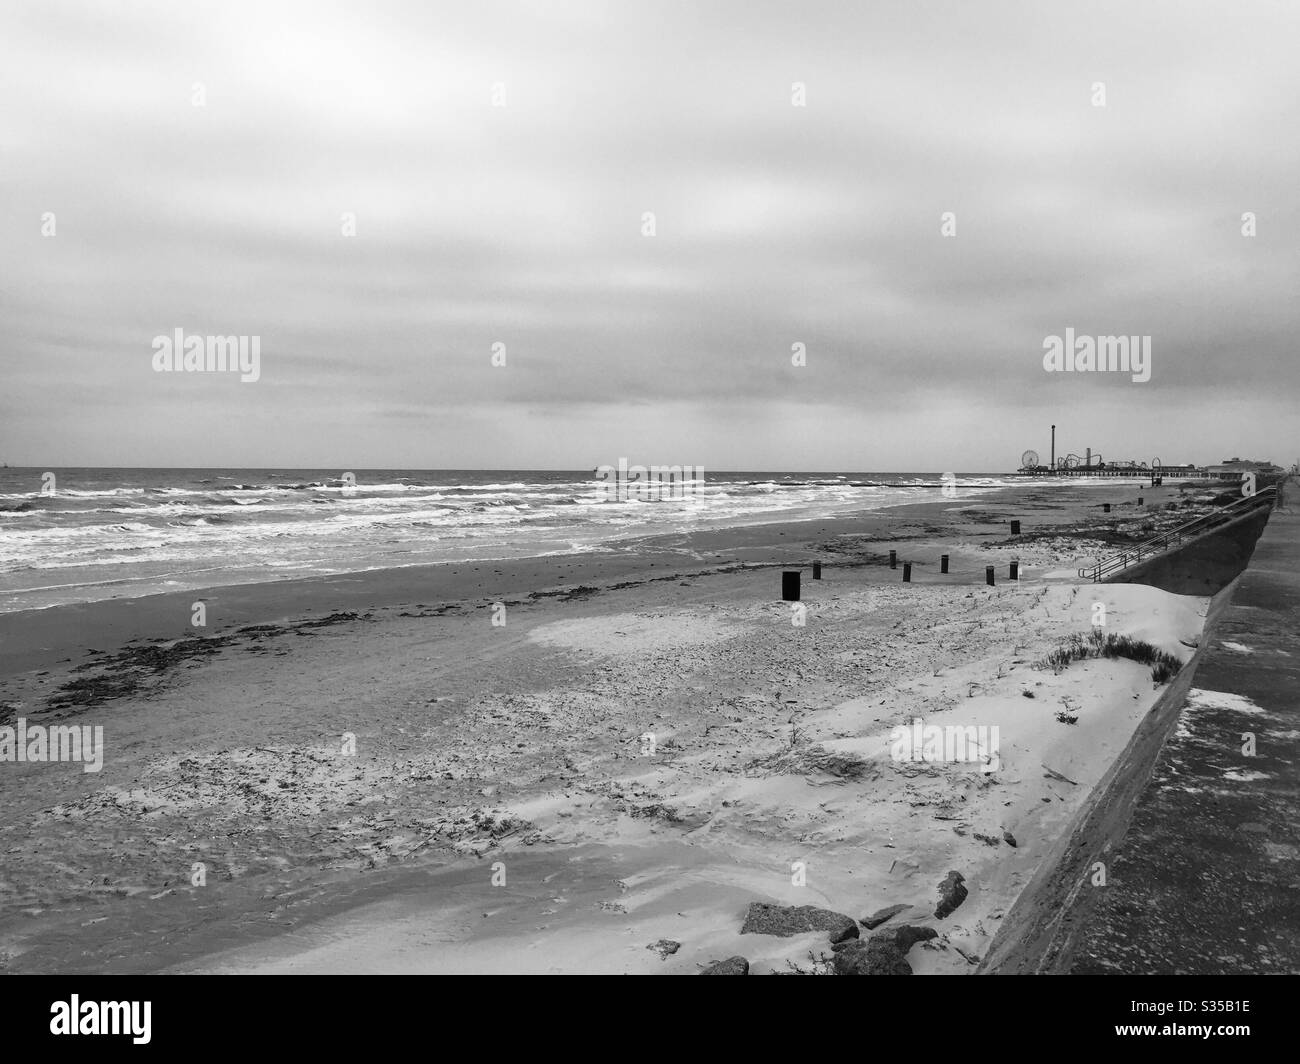 Deserted beach due to closures, Galveston, TX. April 11, 2020. Beaches closed till April 30th. Stock Photo